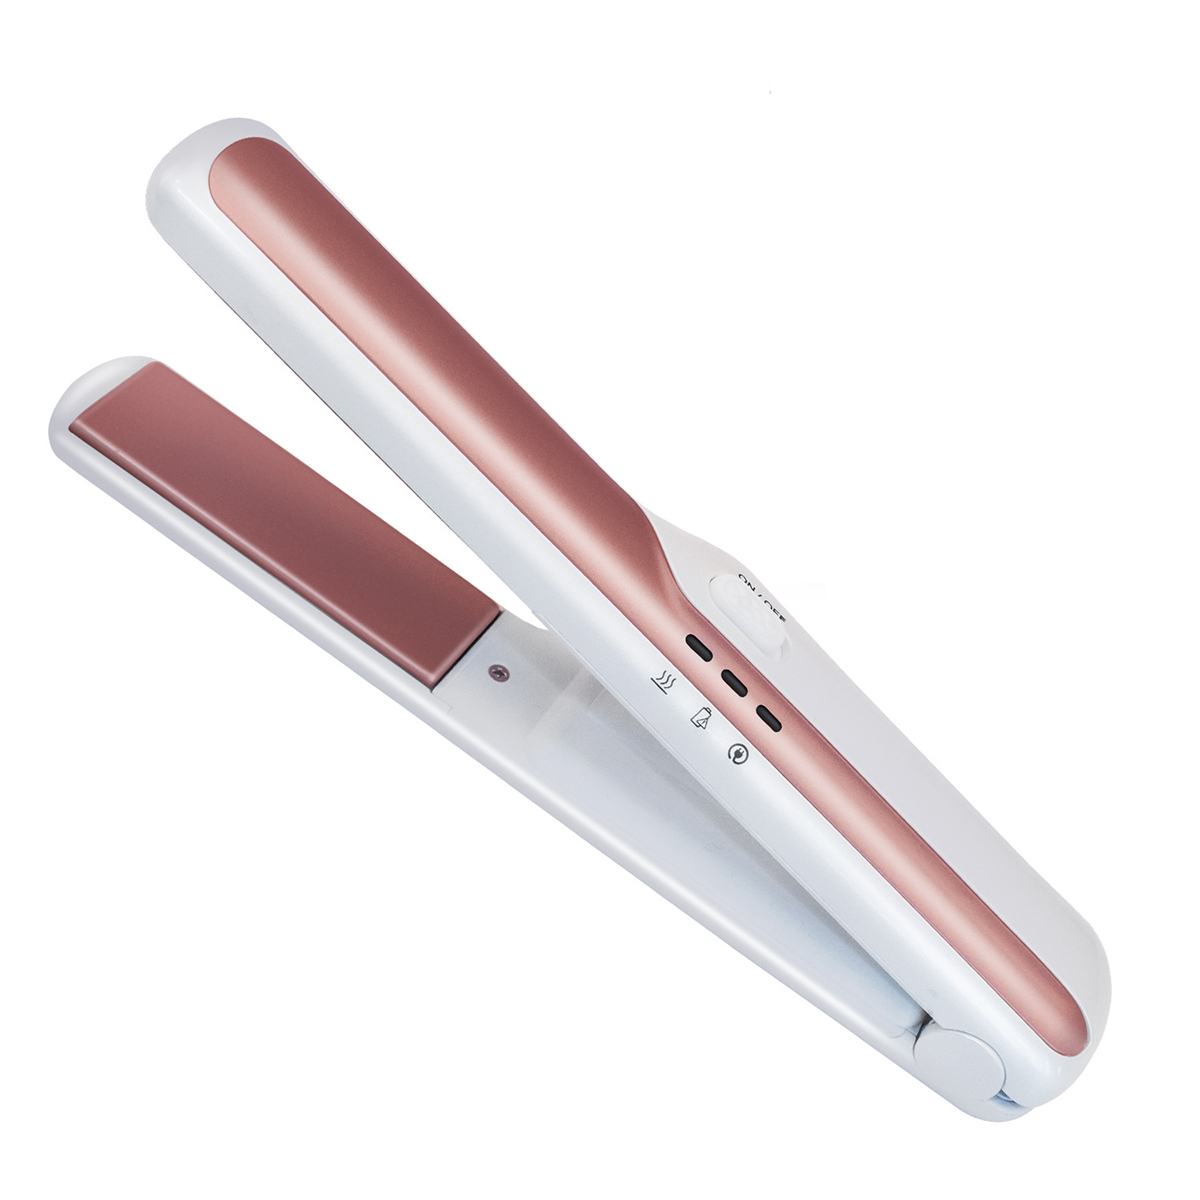 SHAOKE Mini Wireless Haarglätter Keramik 10 Temperaturstufen: einsetzbar Glätteisen, USB-aufladbar Nass/Trocken vielseitig